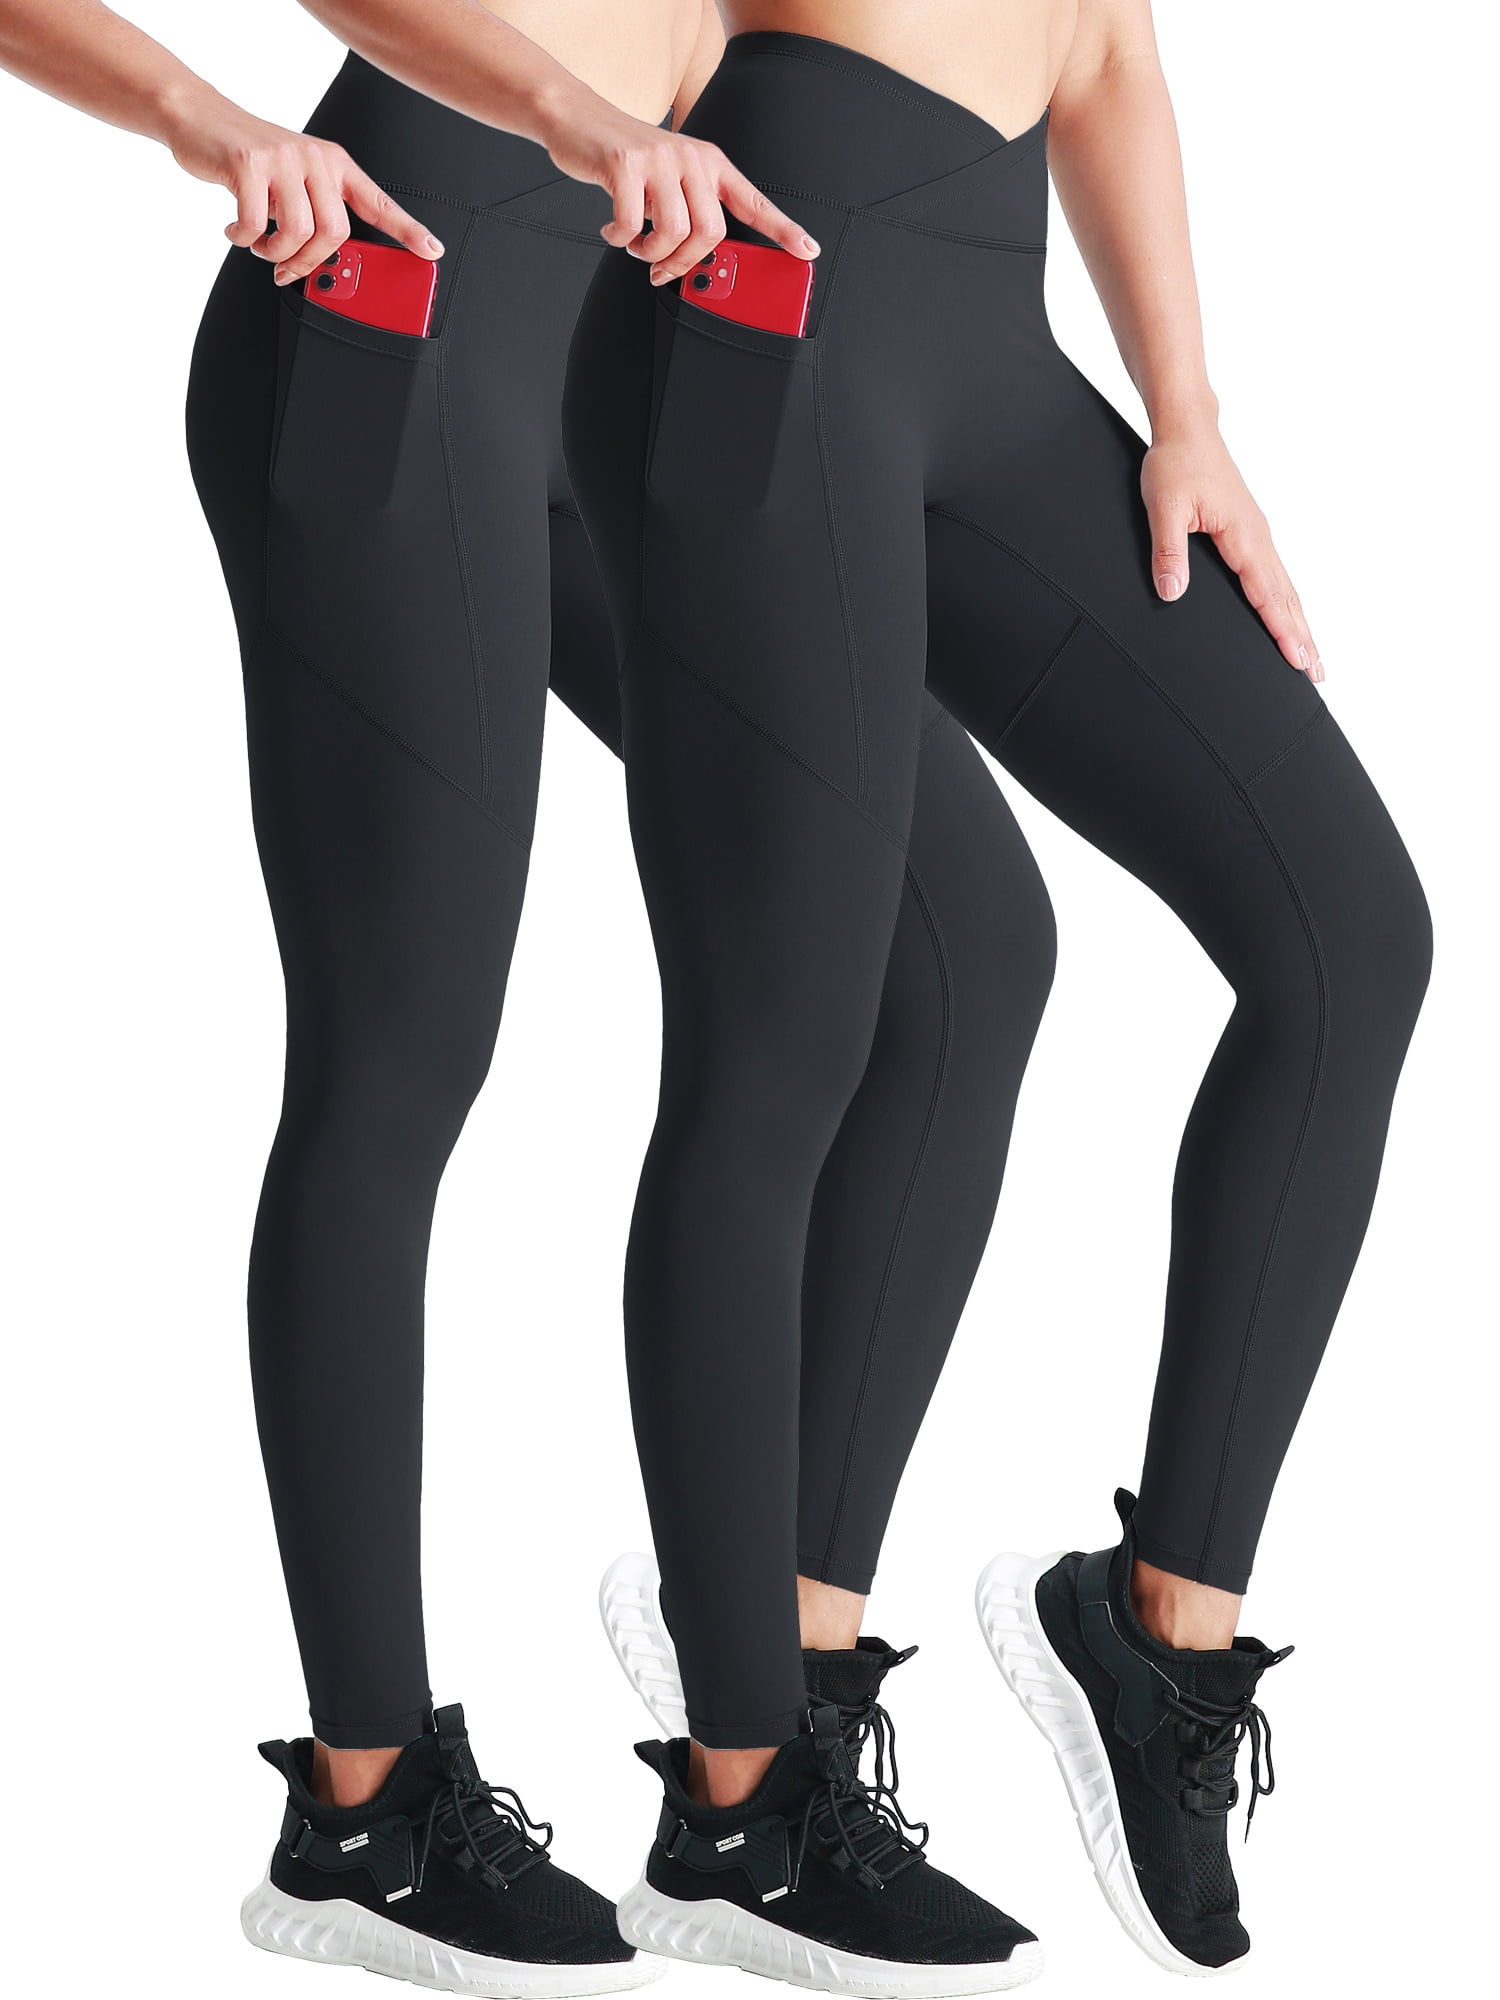 njshnmn Women Bootcut Yoga Pants with Pockets Leggings Crossover